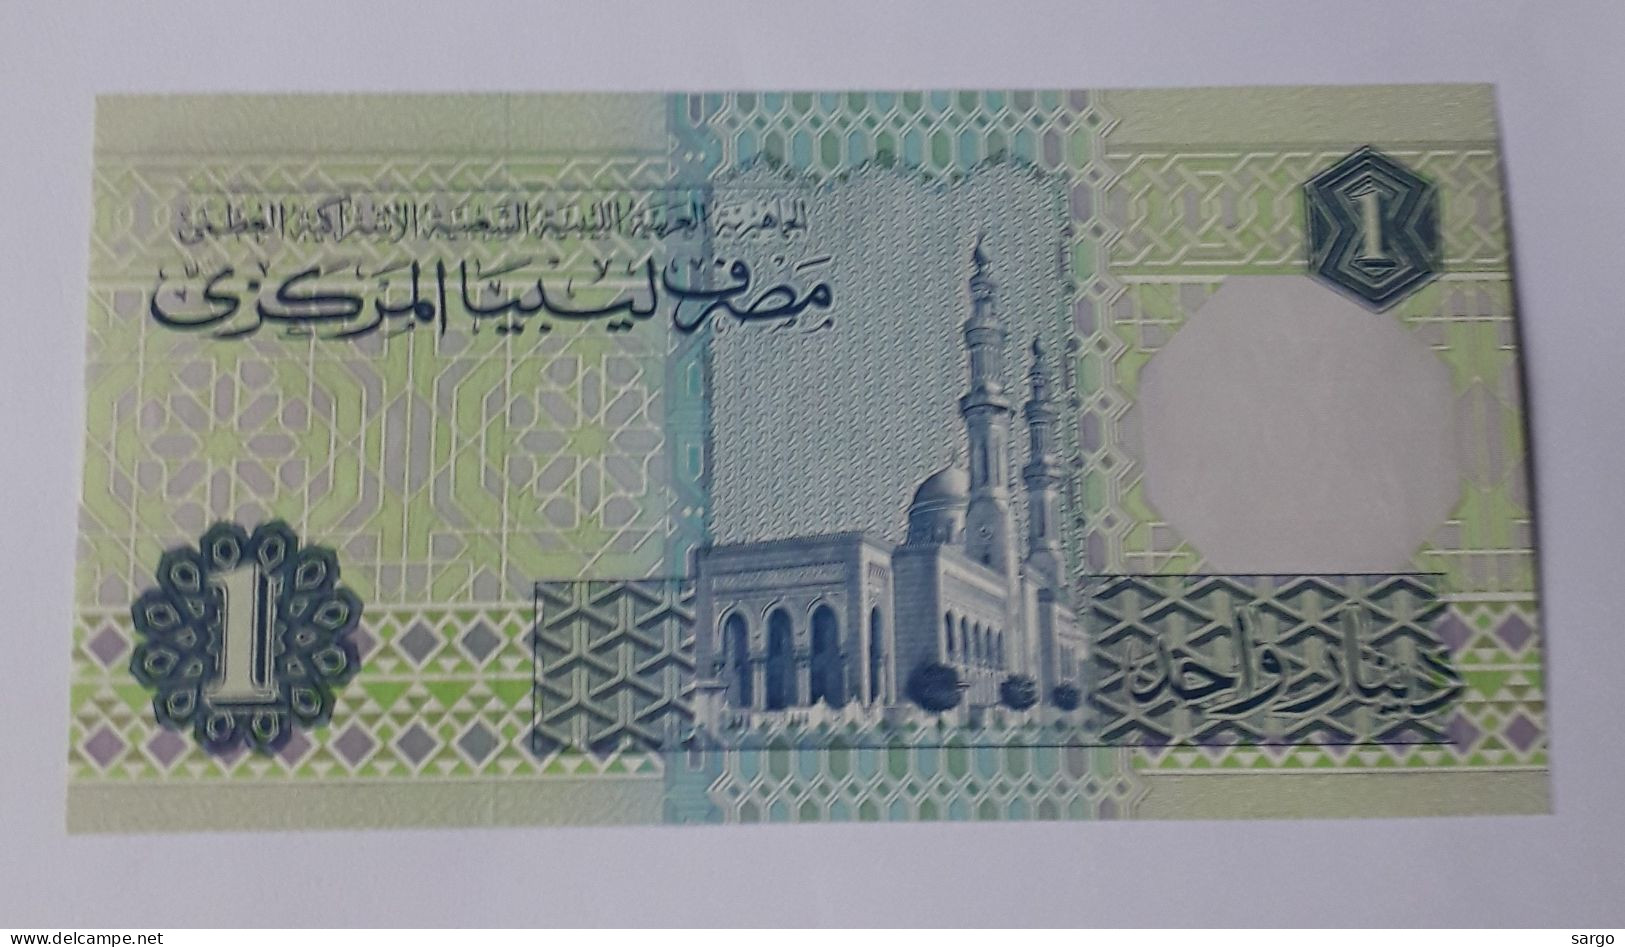 LIBYA - 1 DINAR - 1991 -  P 59b  - UNC - BANKNOTES - PAPER MONEY - CARTAMONETA - - Libye